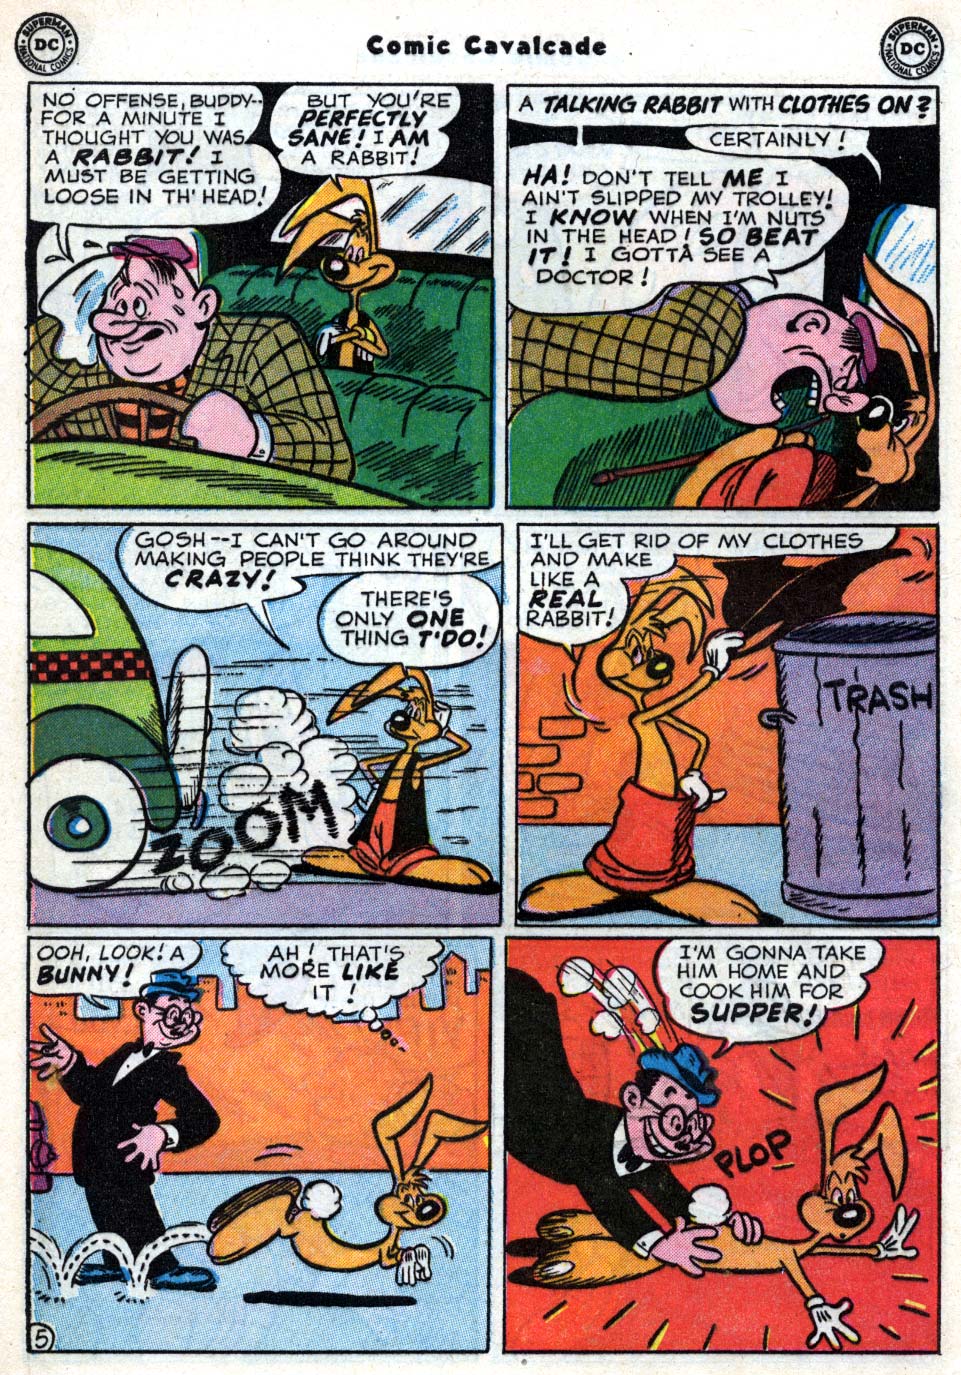 Comic Cavalcade issue 46 - Page 22